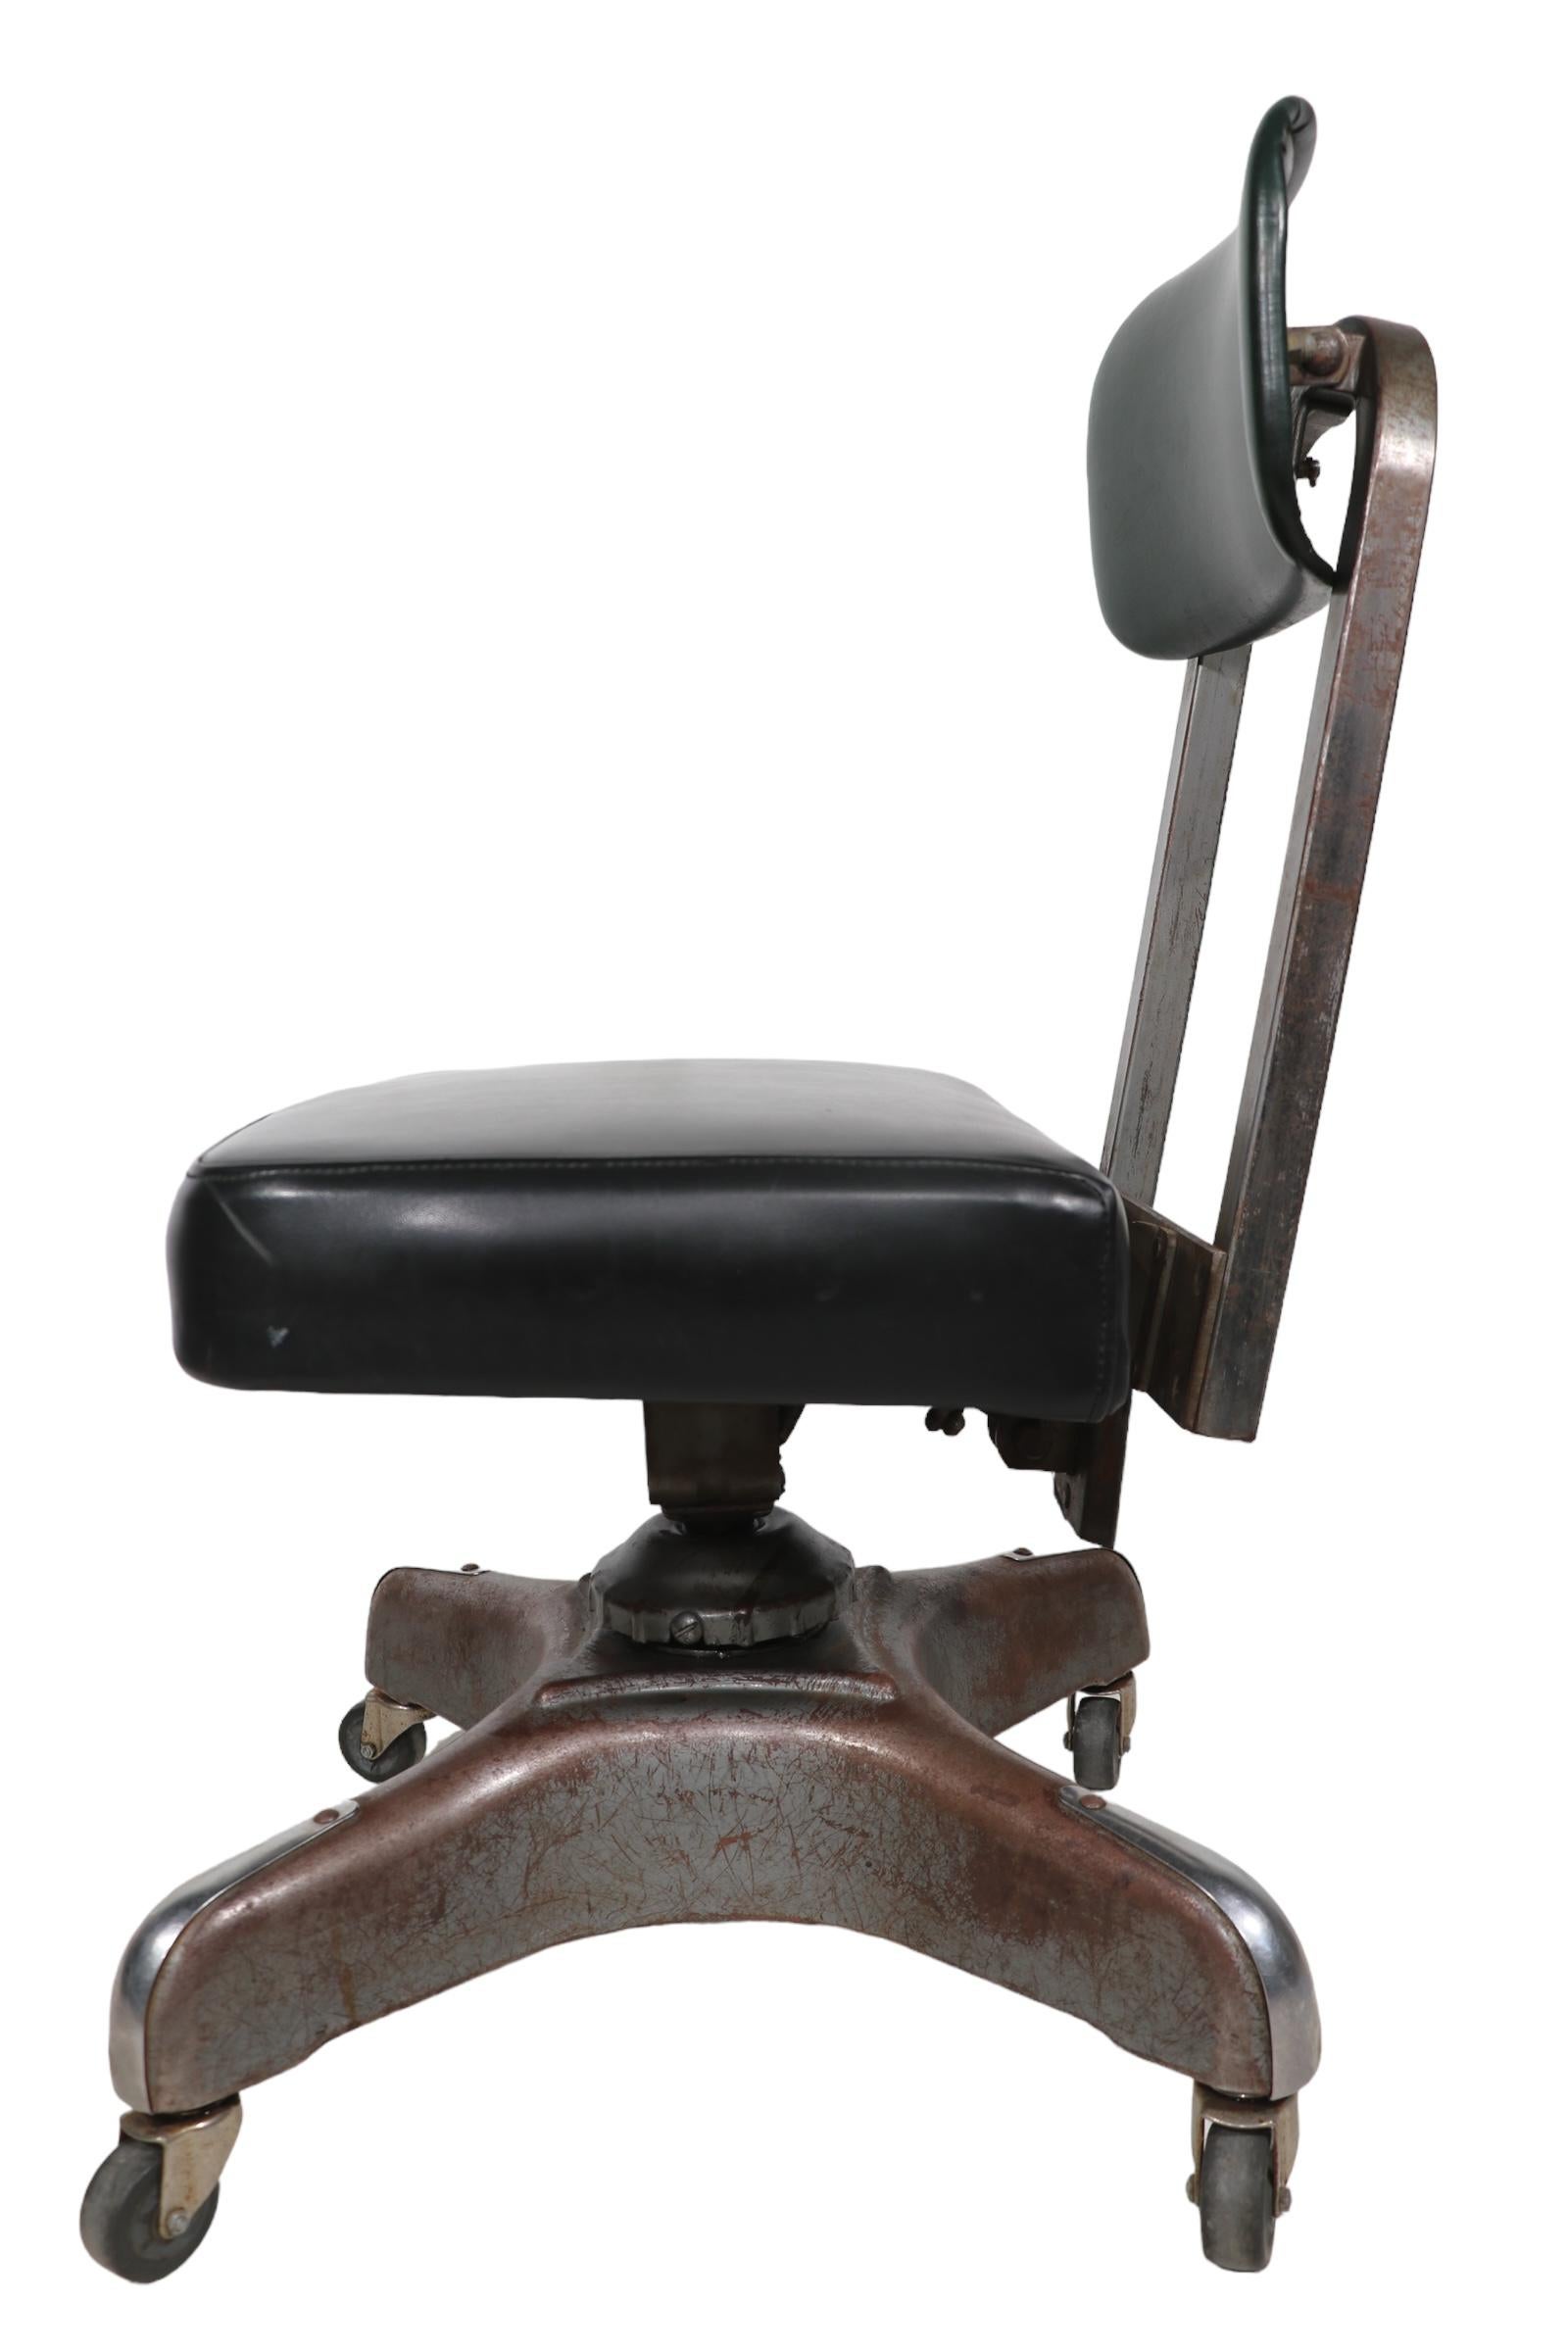 Art Deco Industrial Swivel Tilt Armless Desk Chair by Harter Corporation 1930/40 For Sale 7